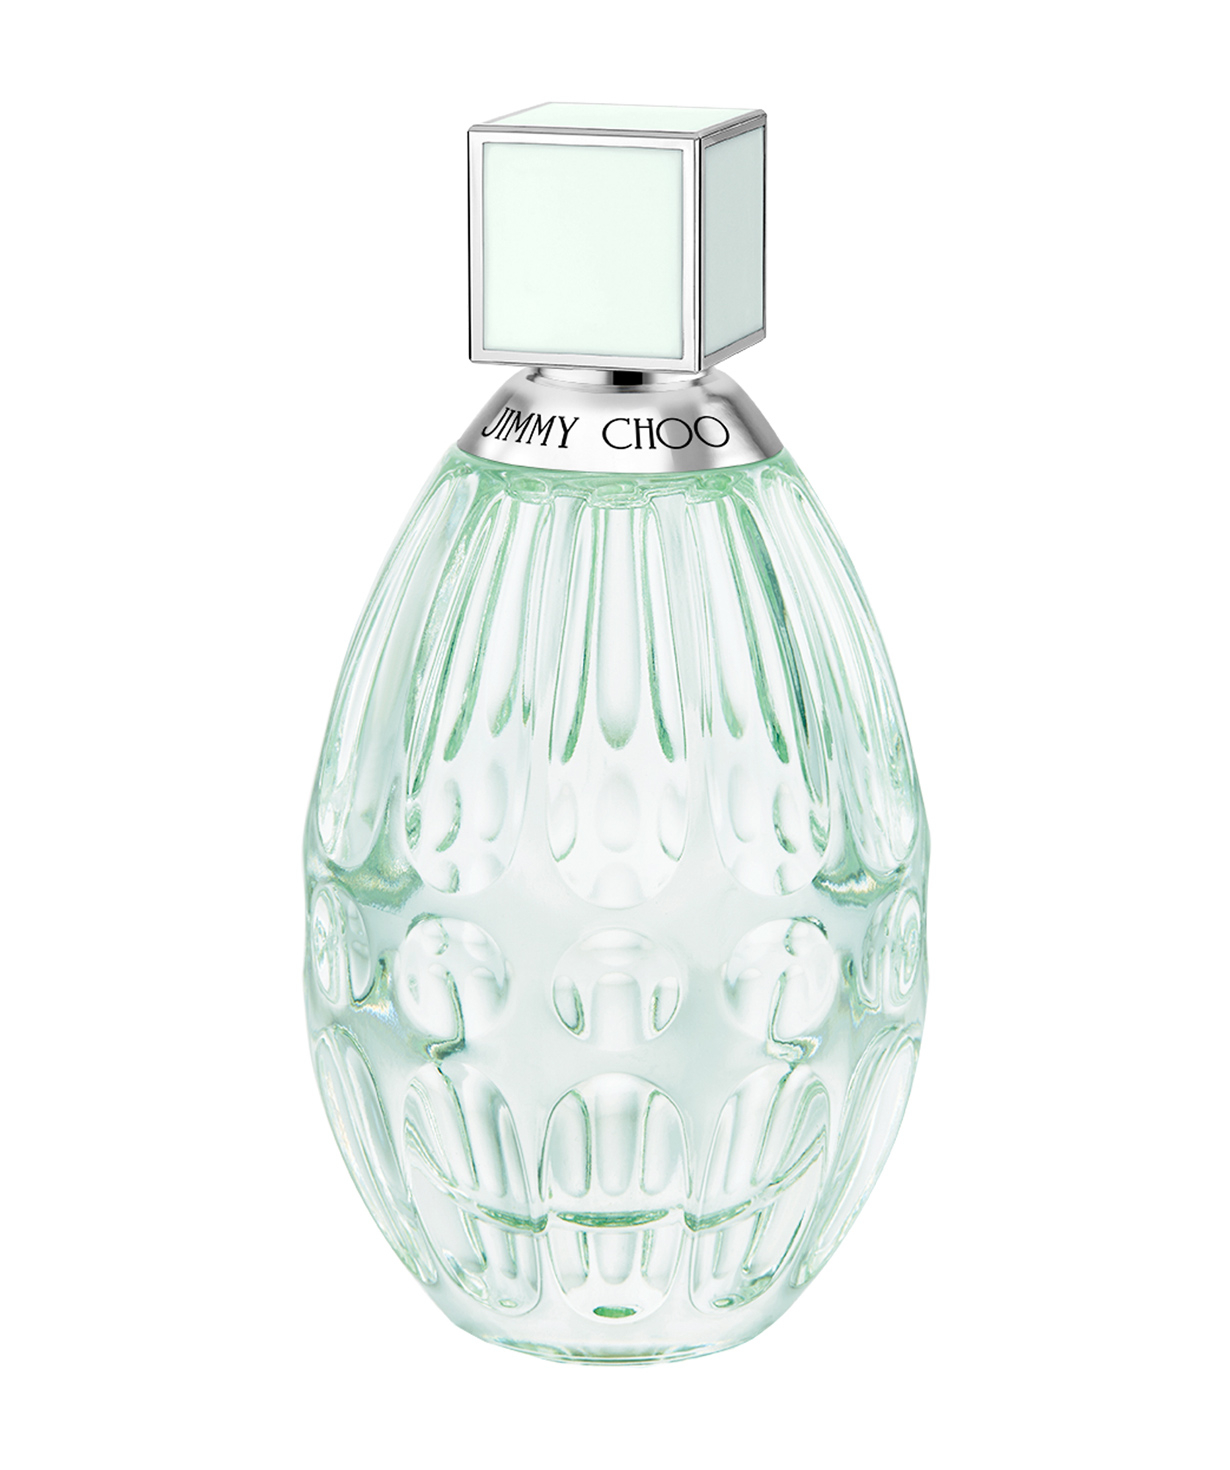 Perfume «Jimmy Choo» Floral, for women, 40 ml